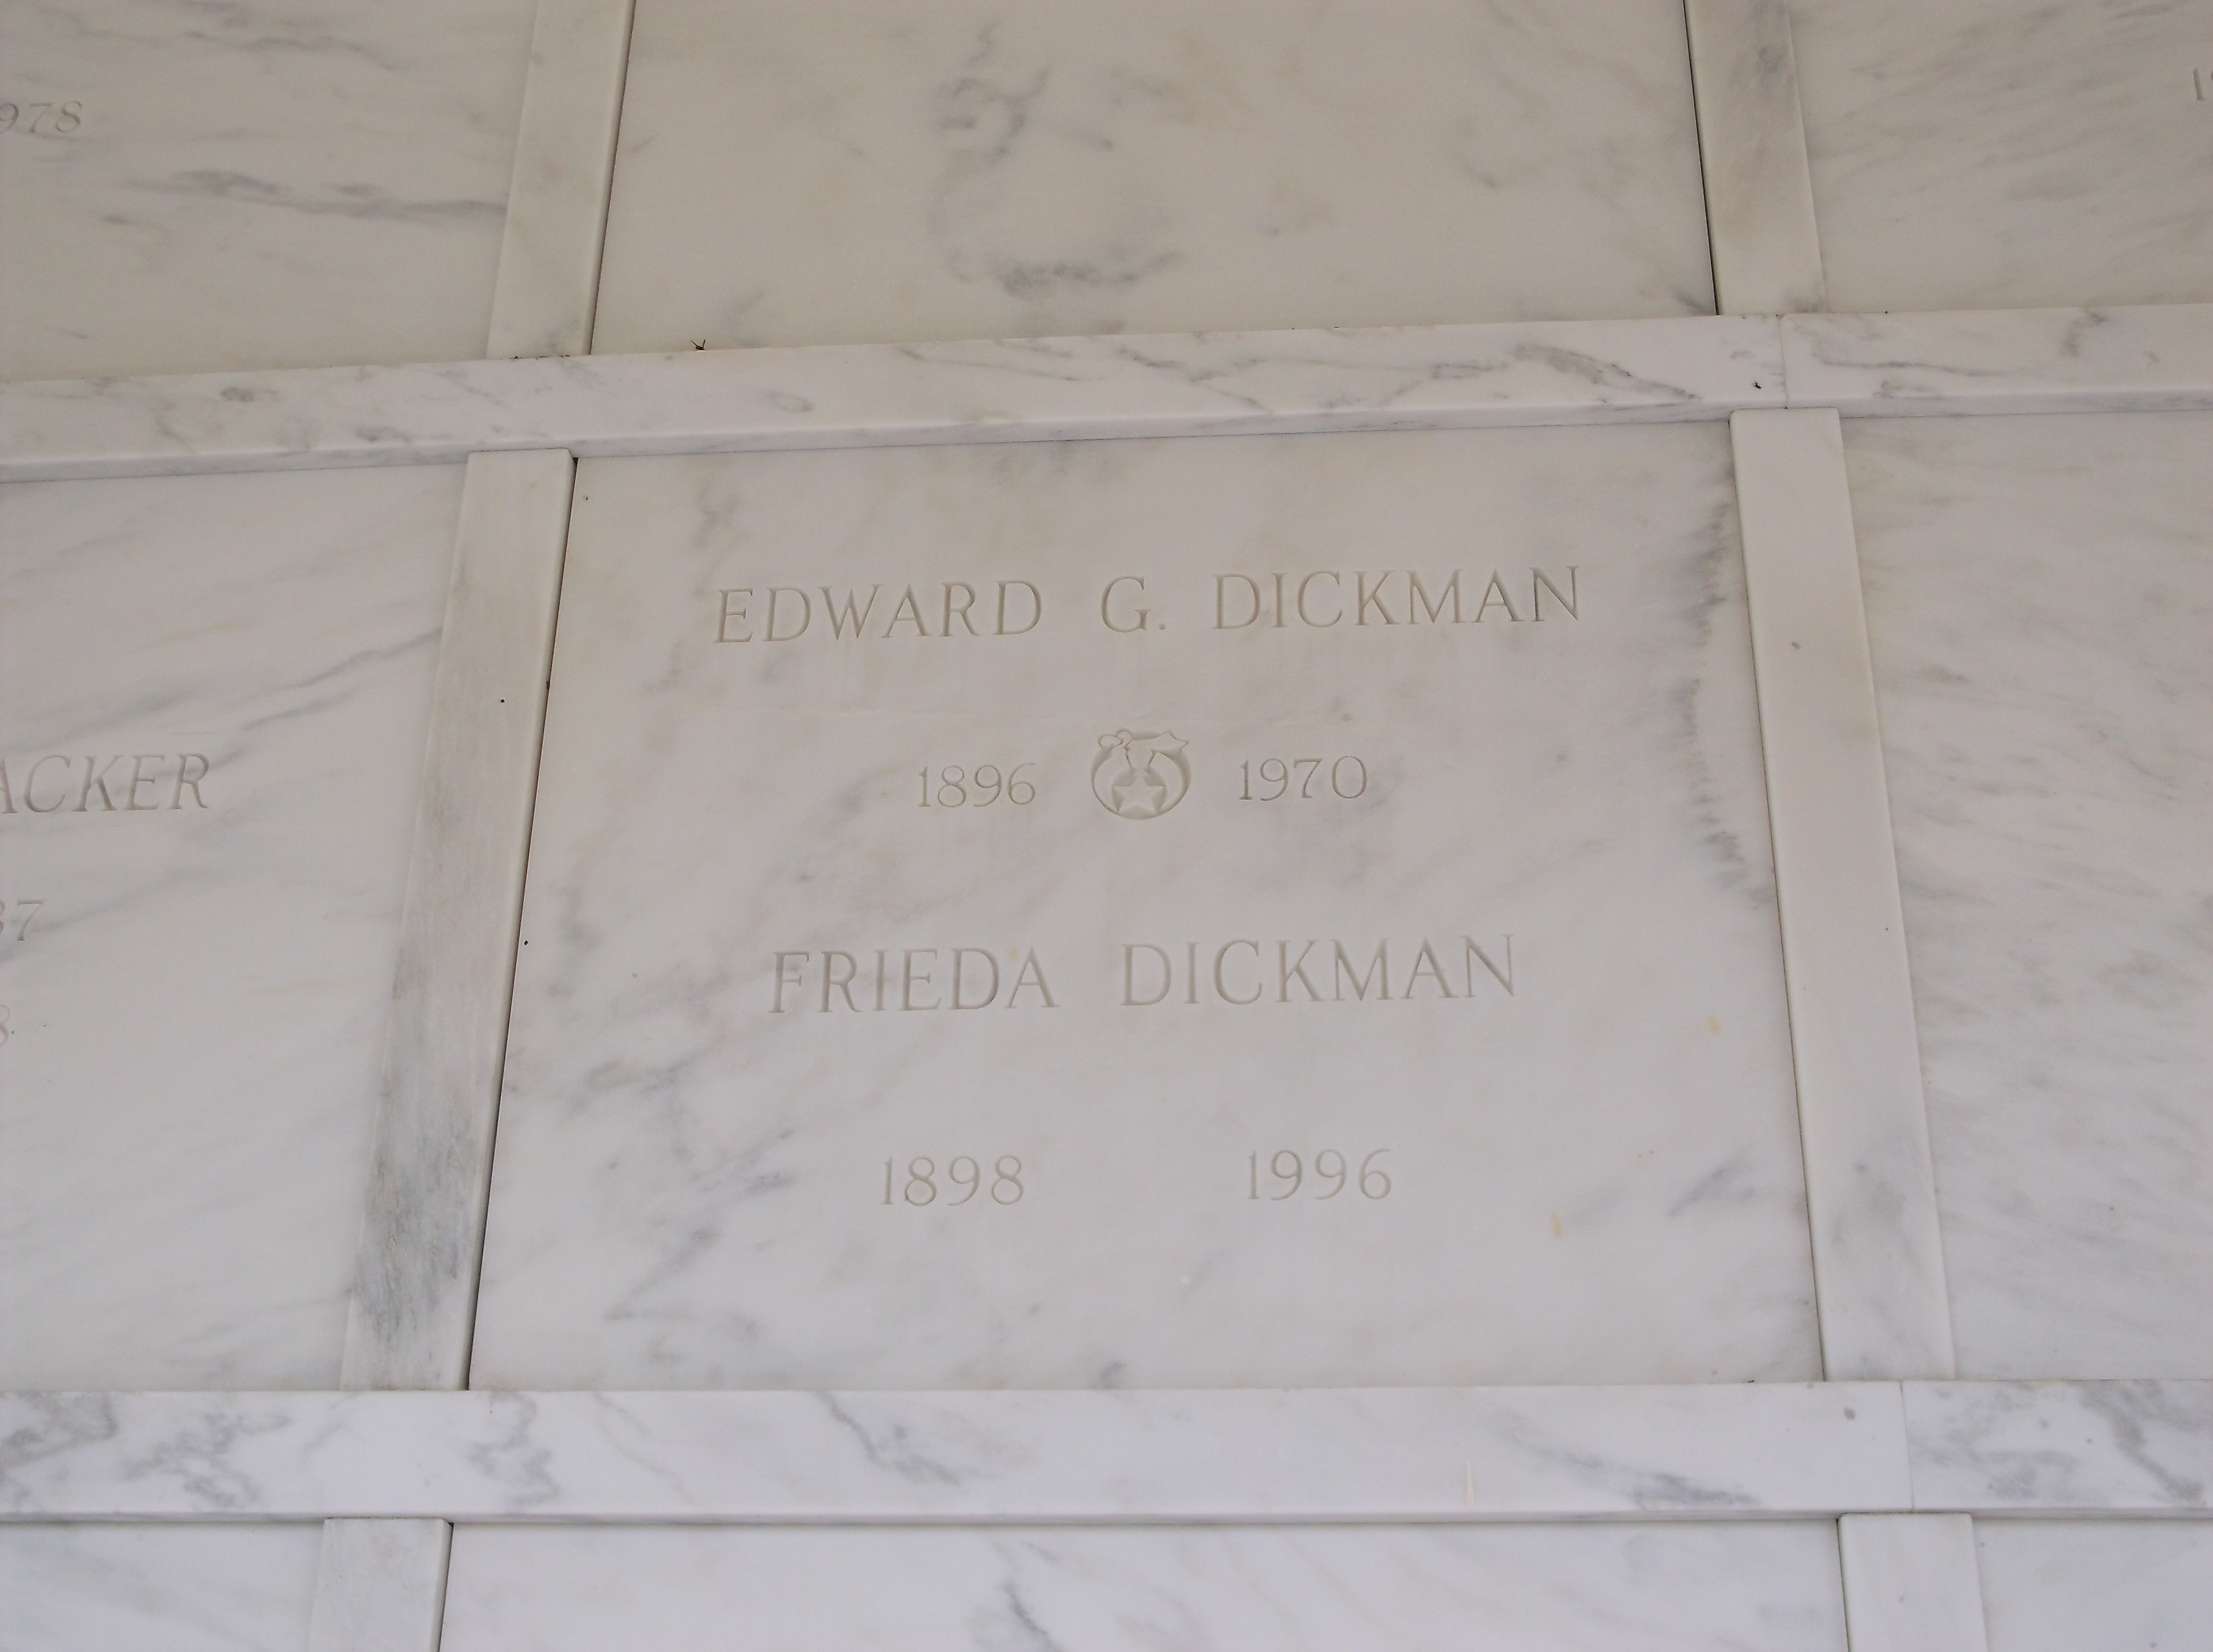 Frieda Dickman